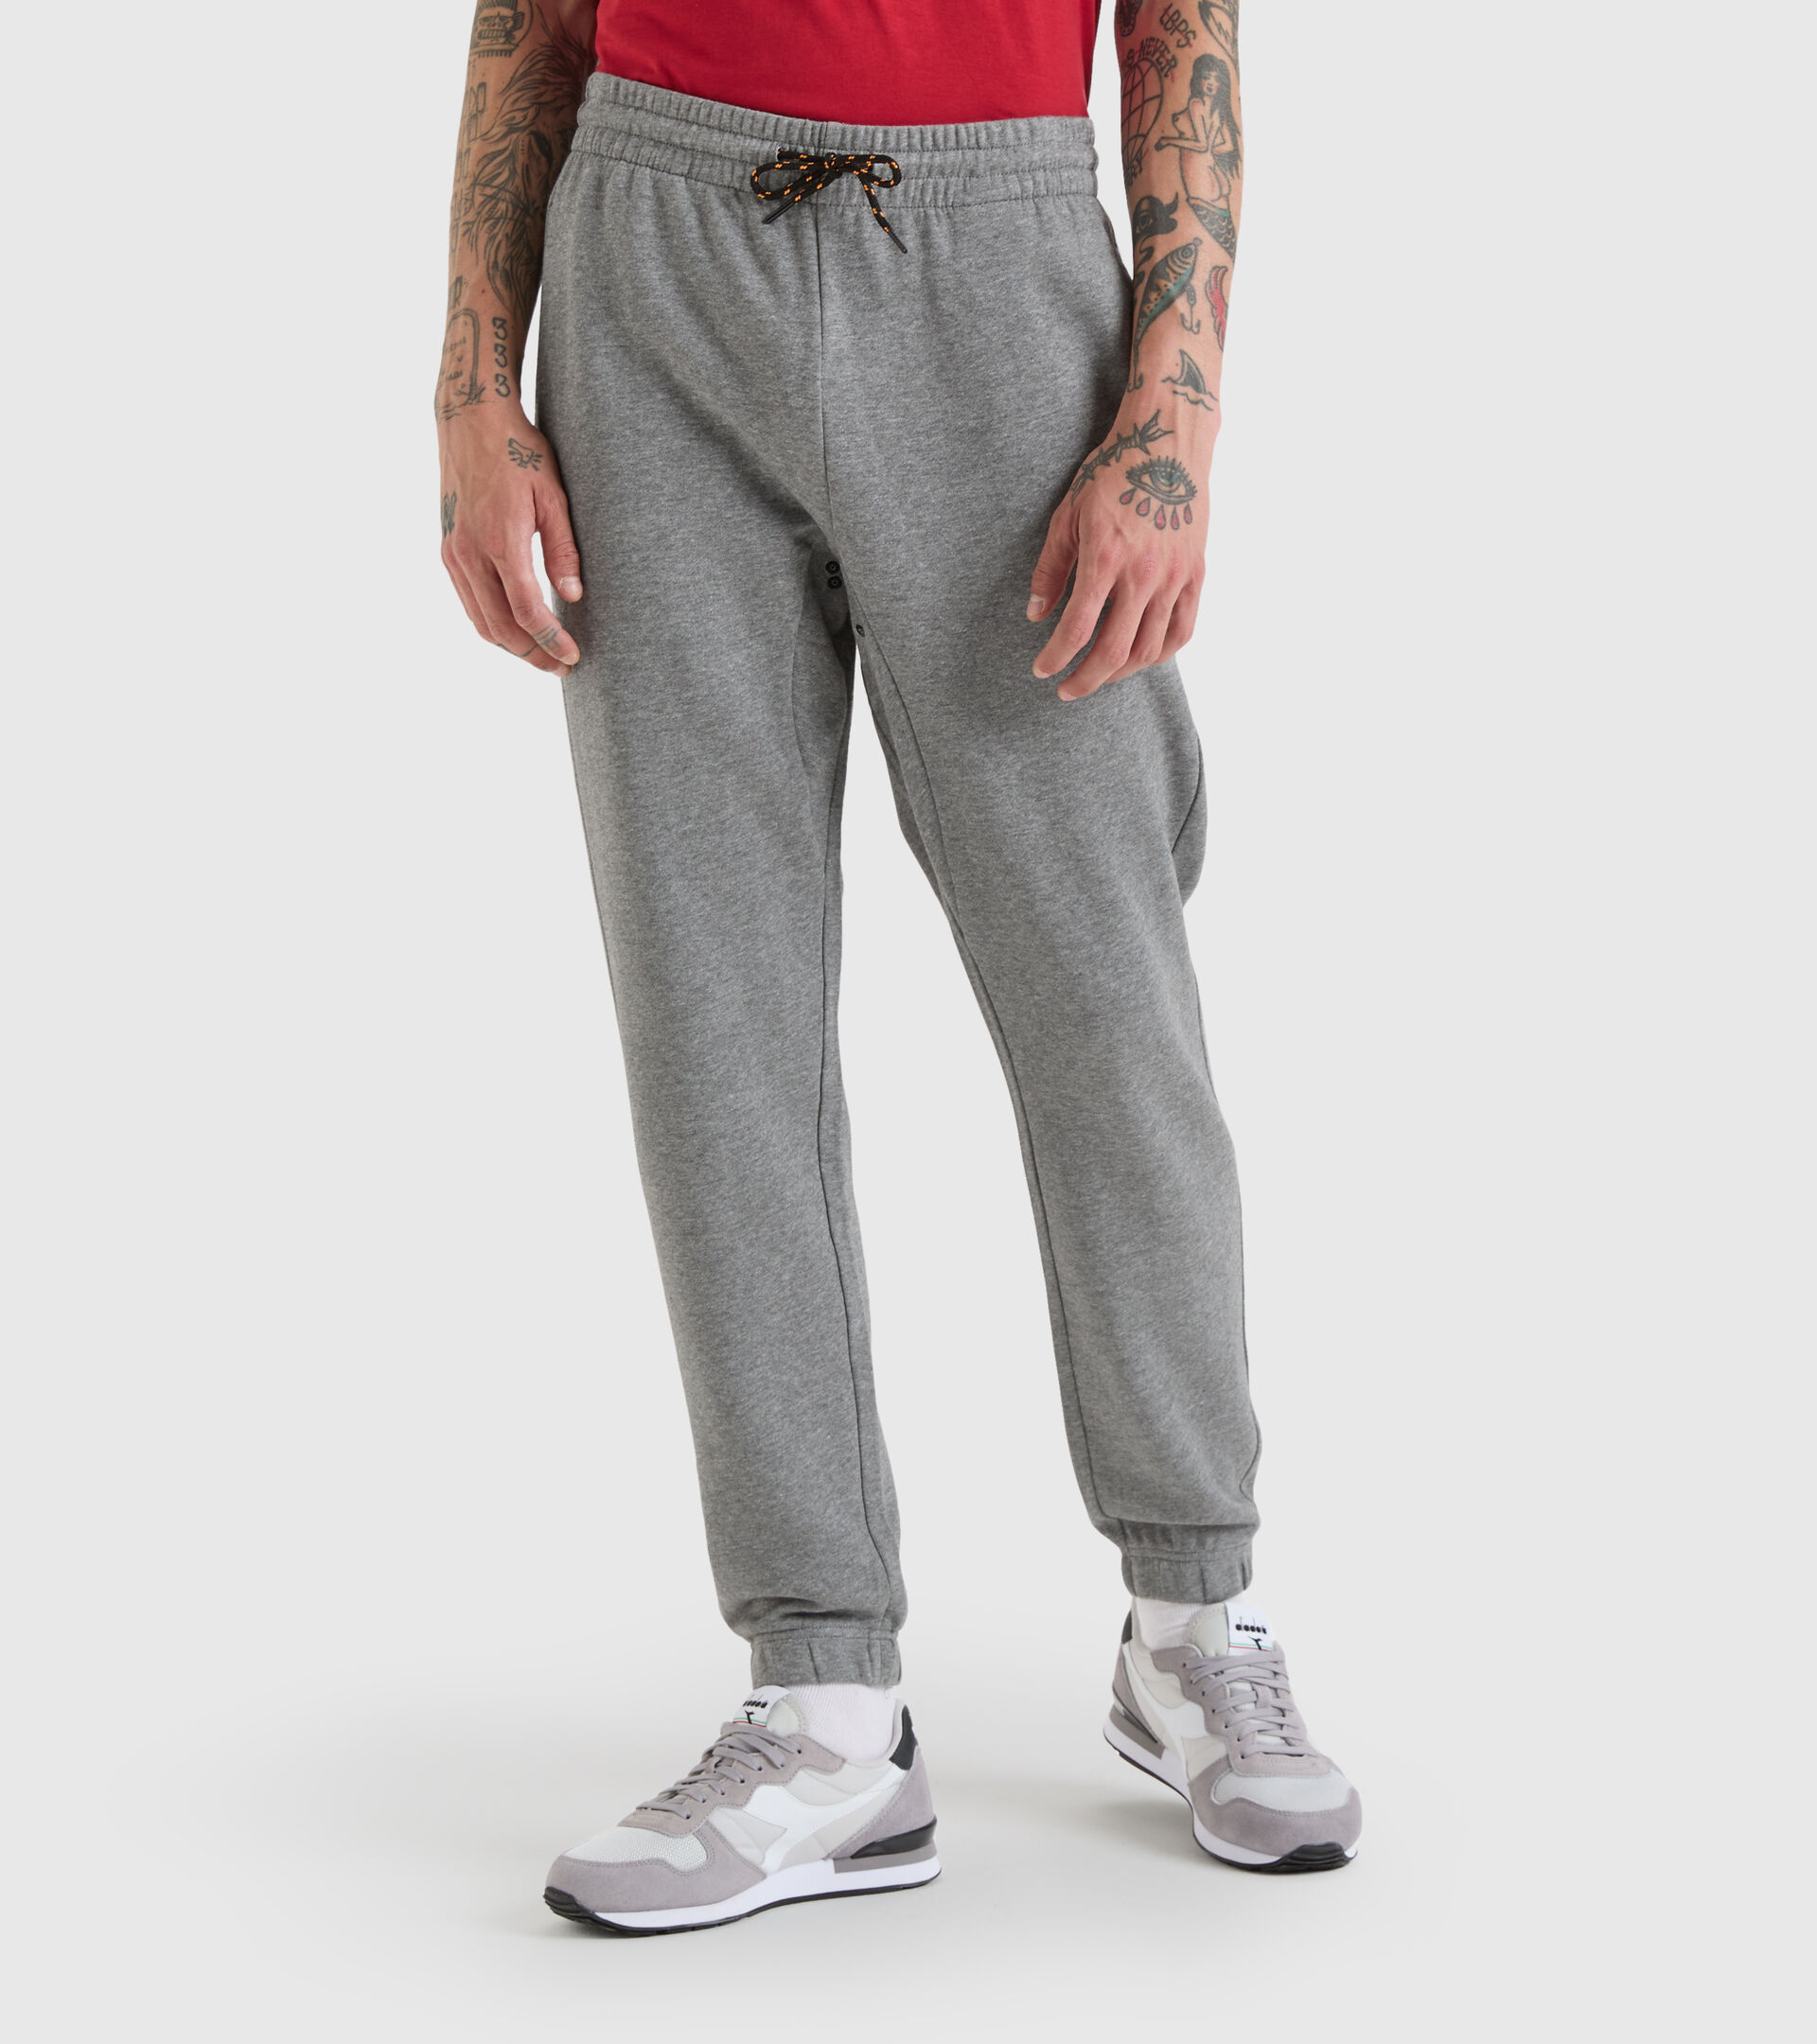 Cotton sports trousers - Men’s PANTS CUFF DRIFT DARK GRAY MELANGE (C6096) - Diadora